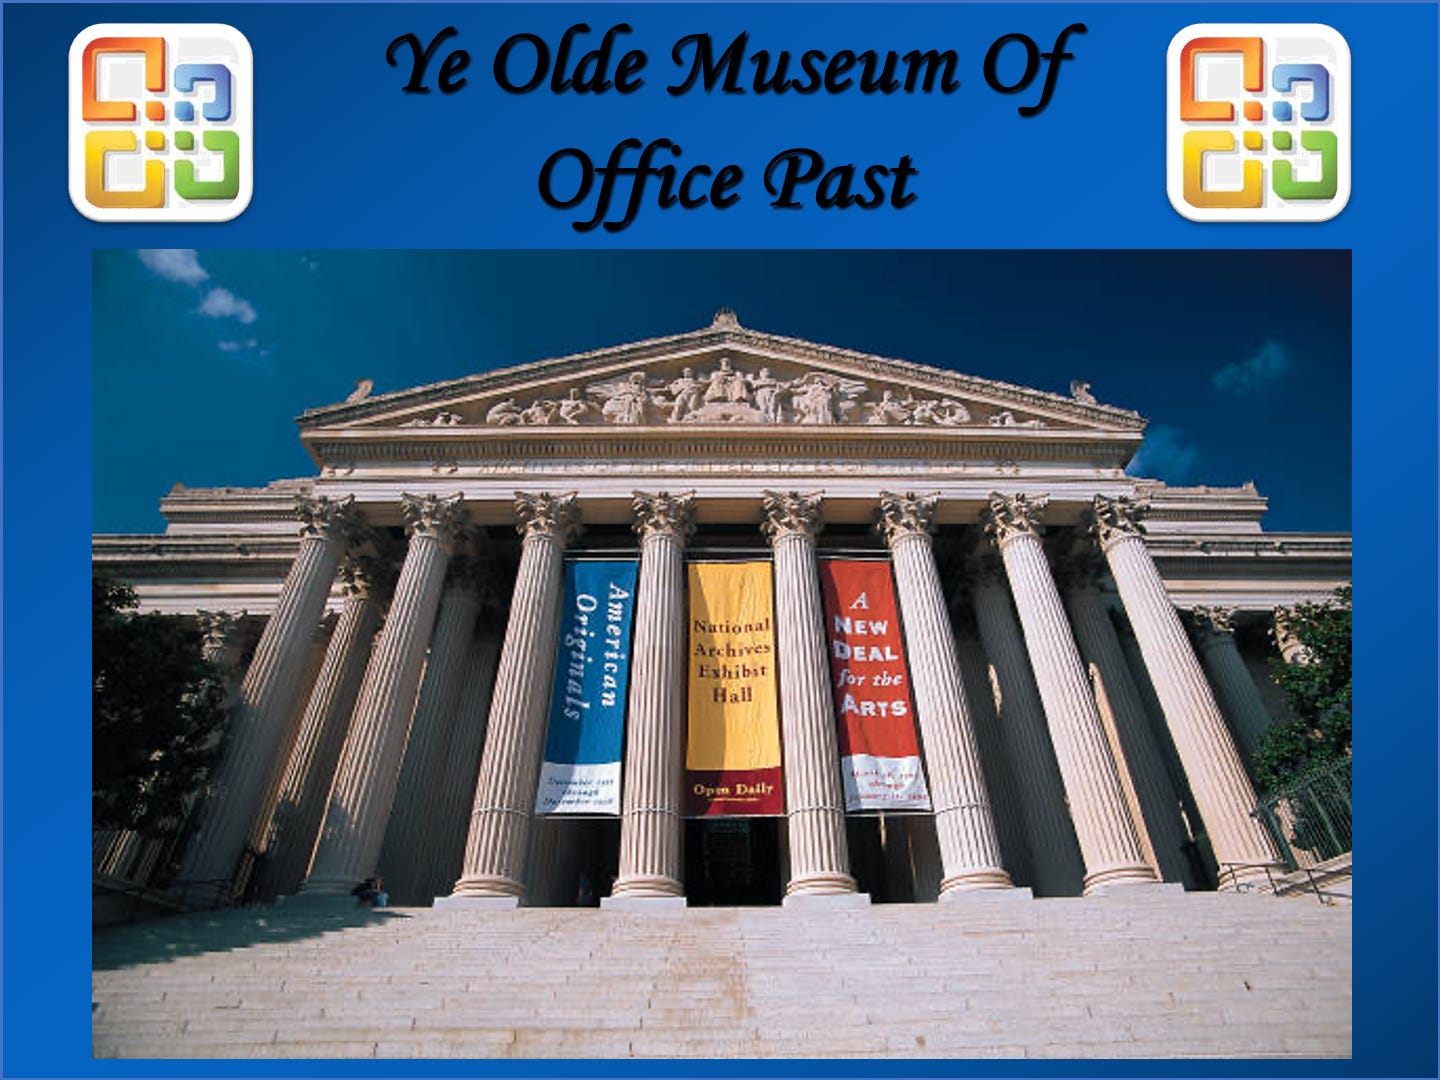 Ye Olde Museum of Microsoft Office Past"